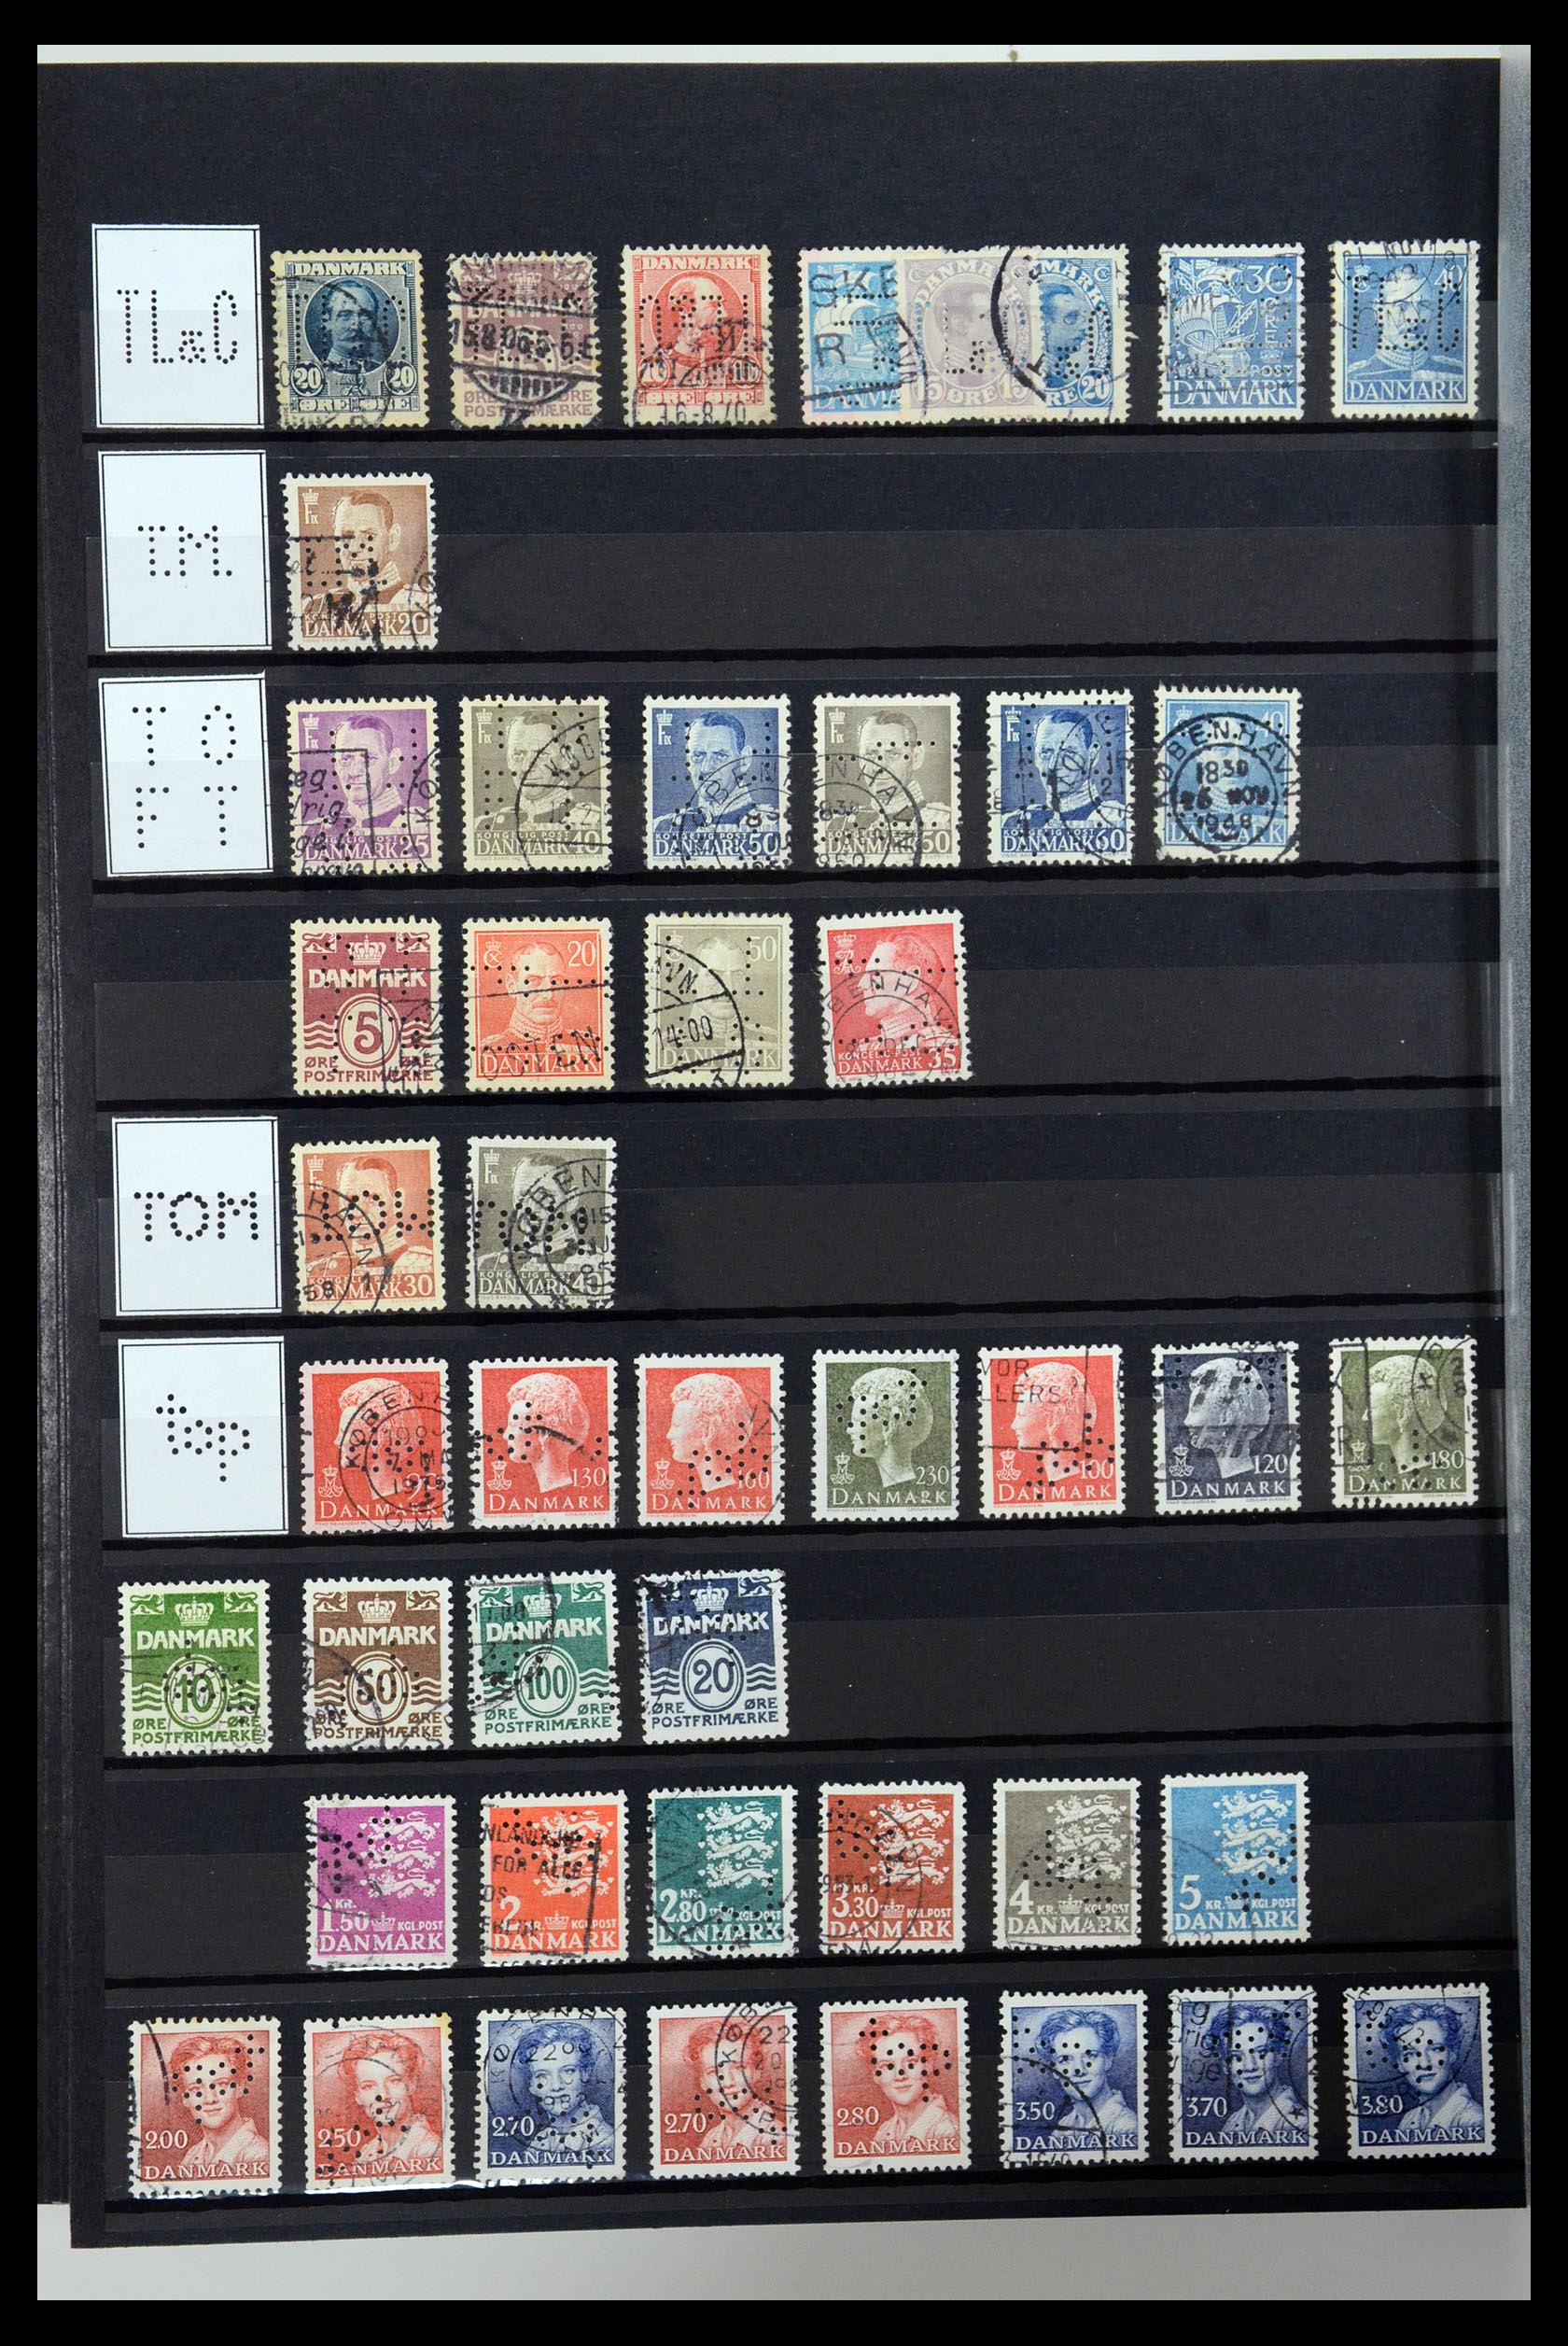 36396 216 - Stamp collection 36396 Denmark perfins.